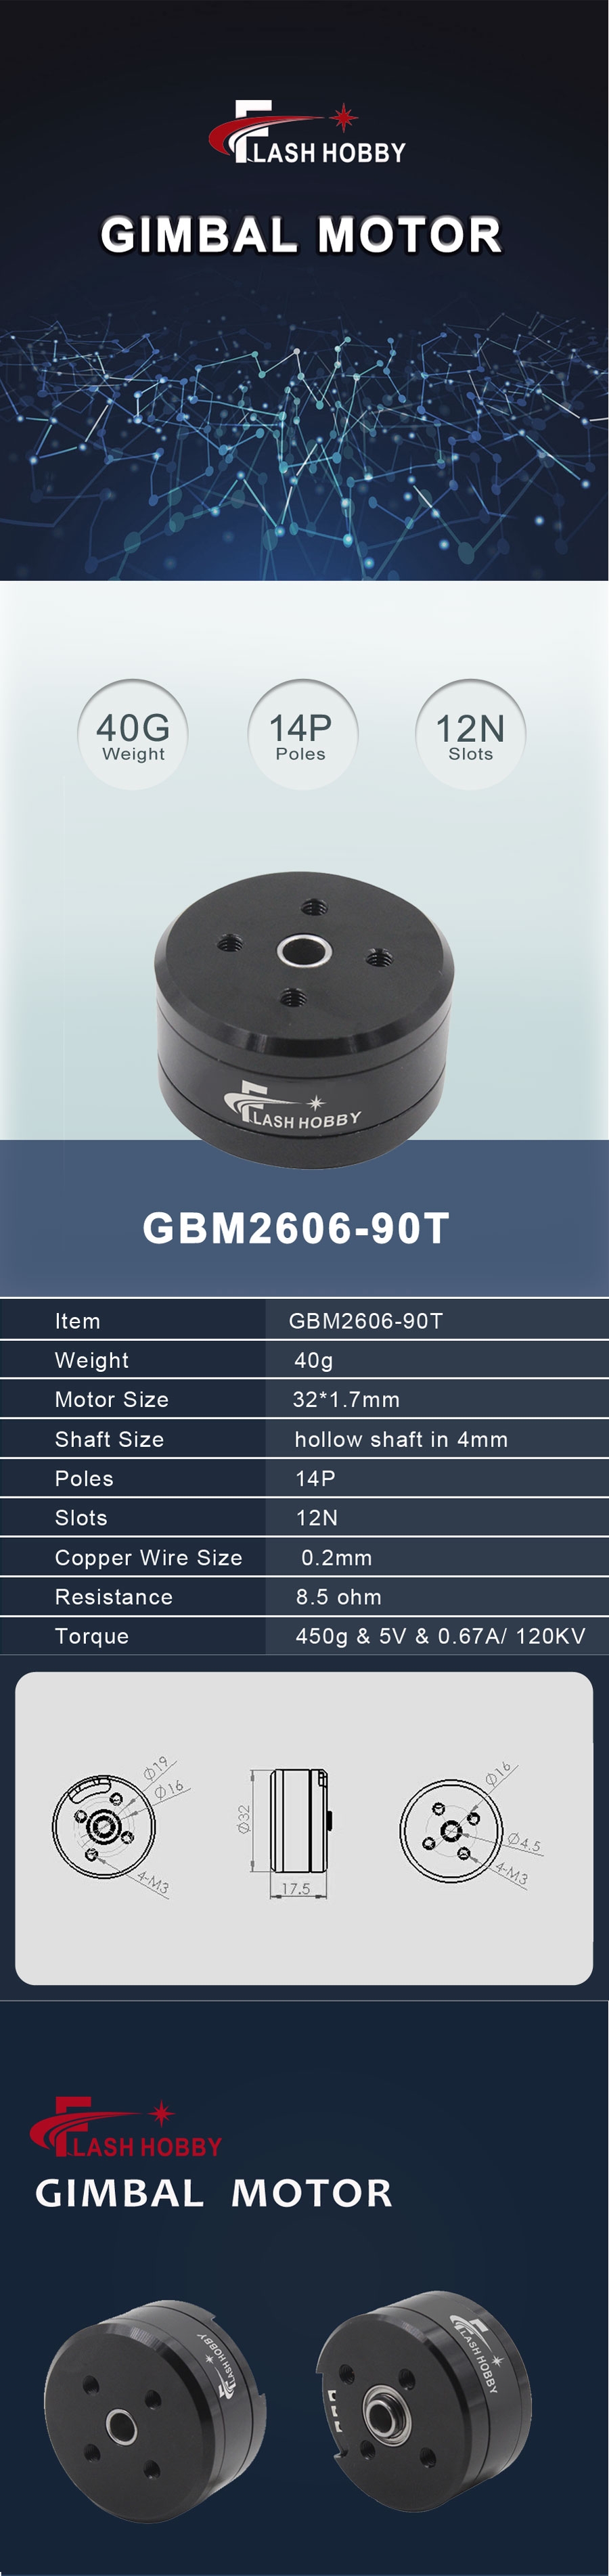 Flashhobby GBM2606-90T 120KV 14P12N 4mm Hollow Shaft 40g Gimbal Motor